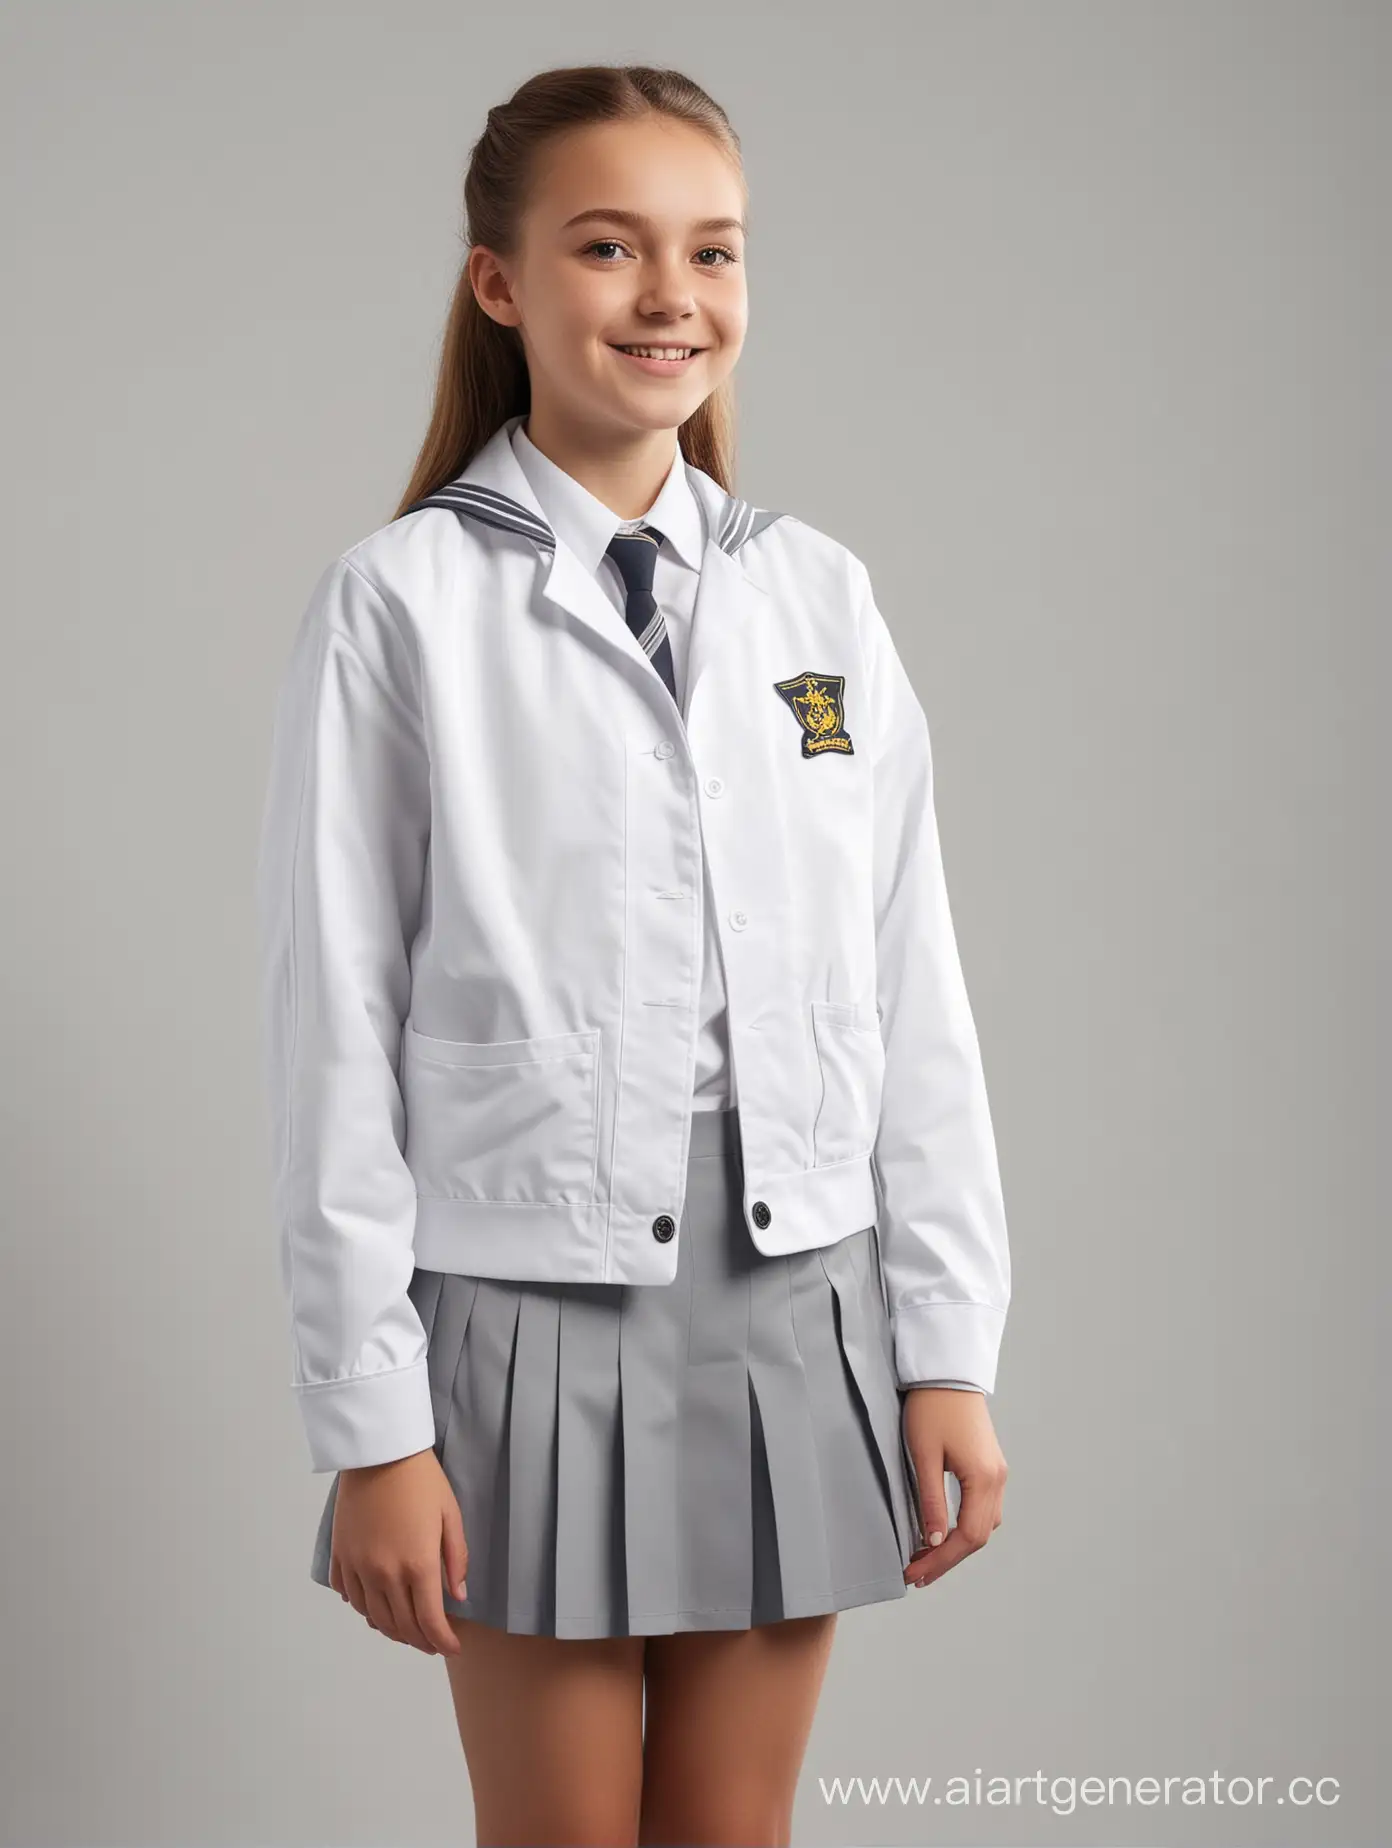 Teenage-Class-Captain-in-White-Cropped-Jacket-School-Uniform-4K-Image